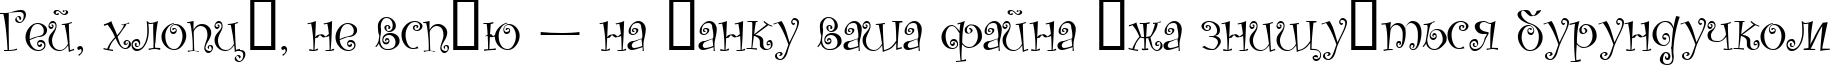 Пример написания шрифтом Kuritza текста на украинском